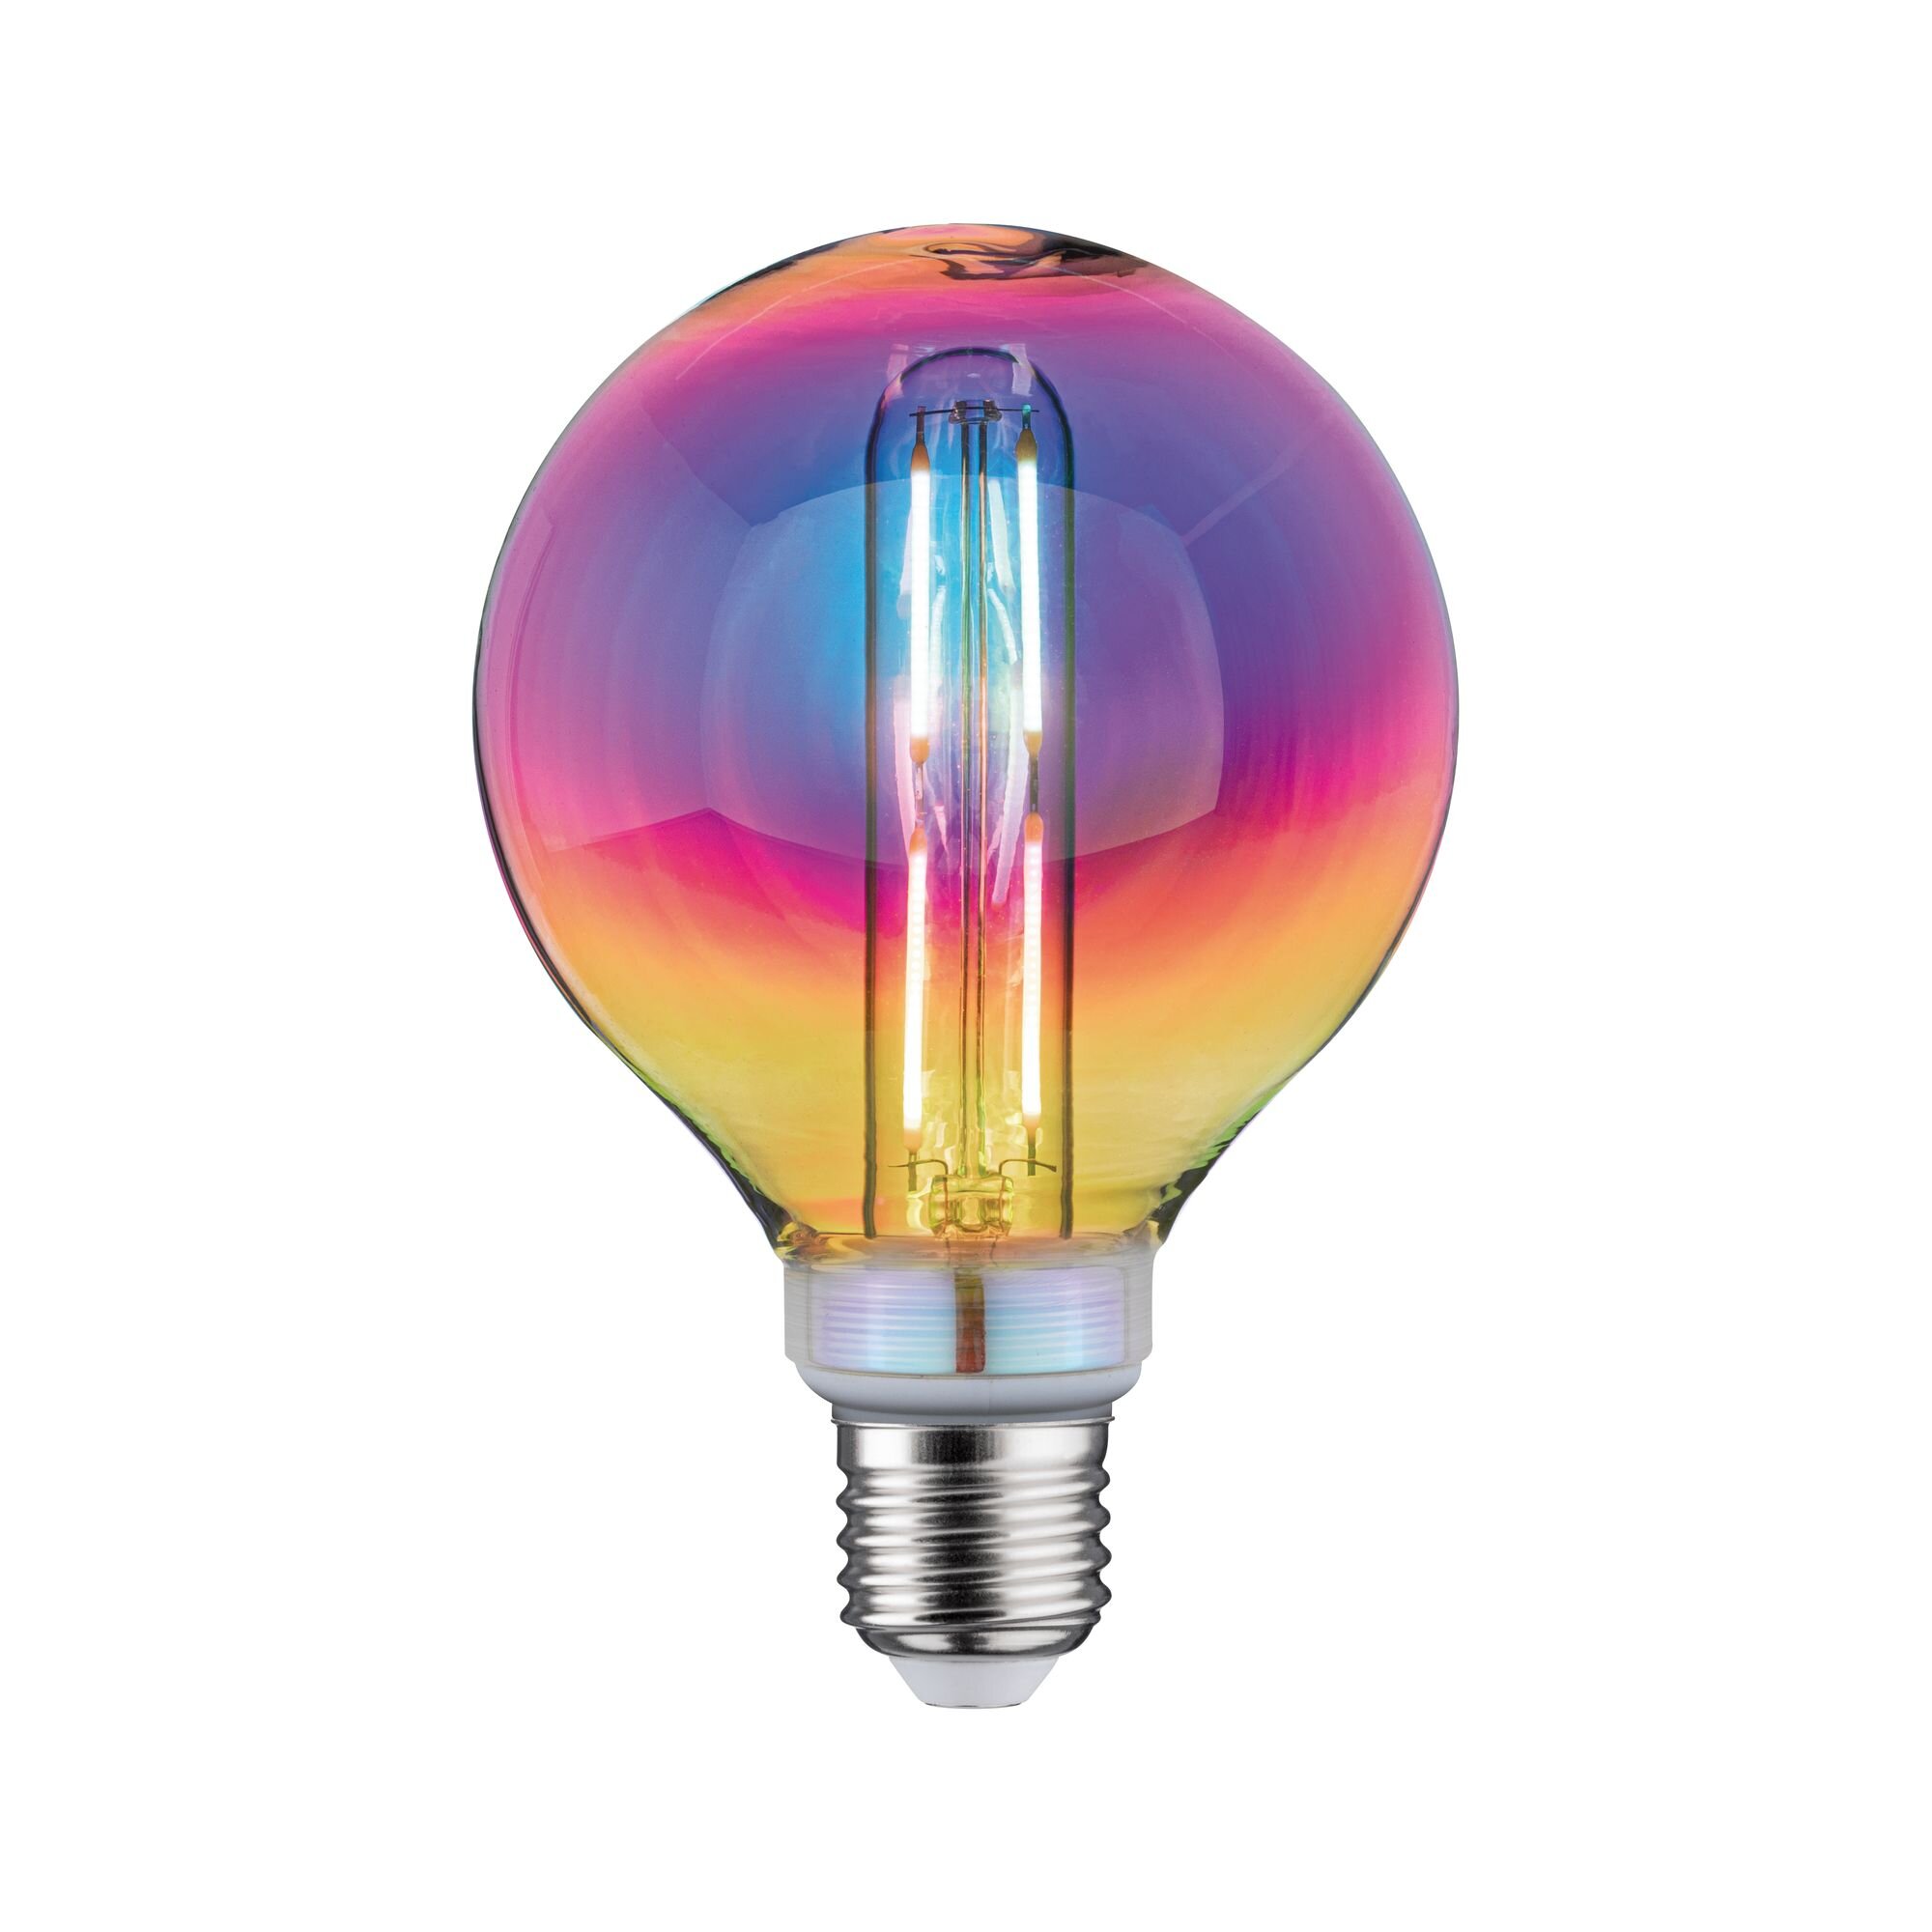 confirm Vaccinate Toxic Paulmann 5W E27 Dimmable LED Globe Light Bulb Pink | Wayfair.co.uk